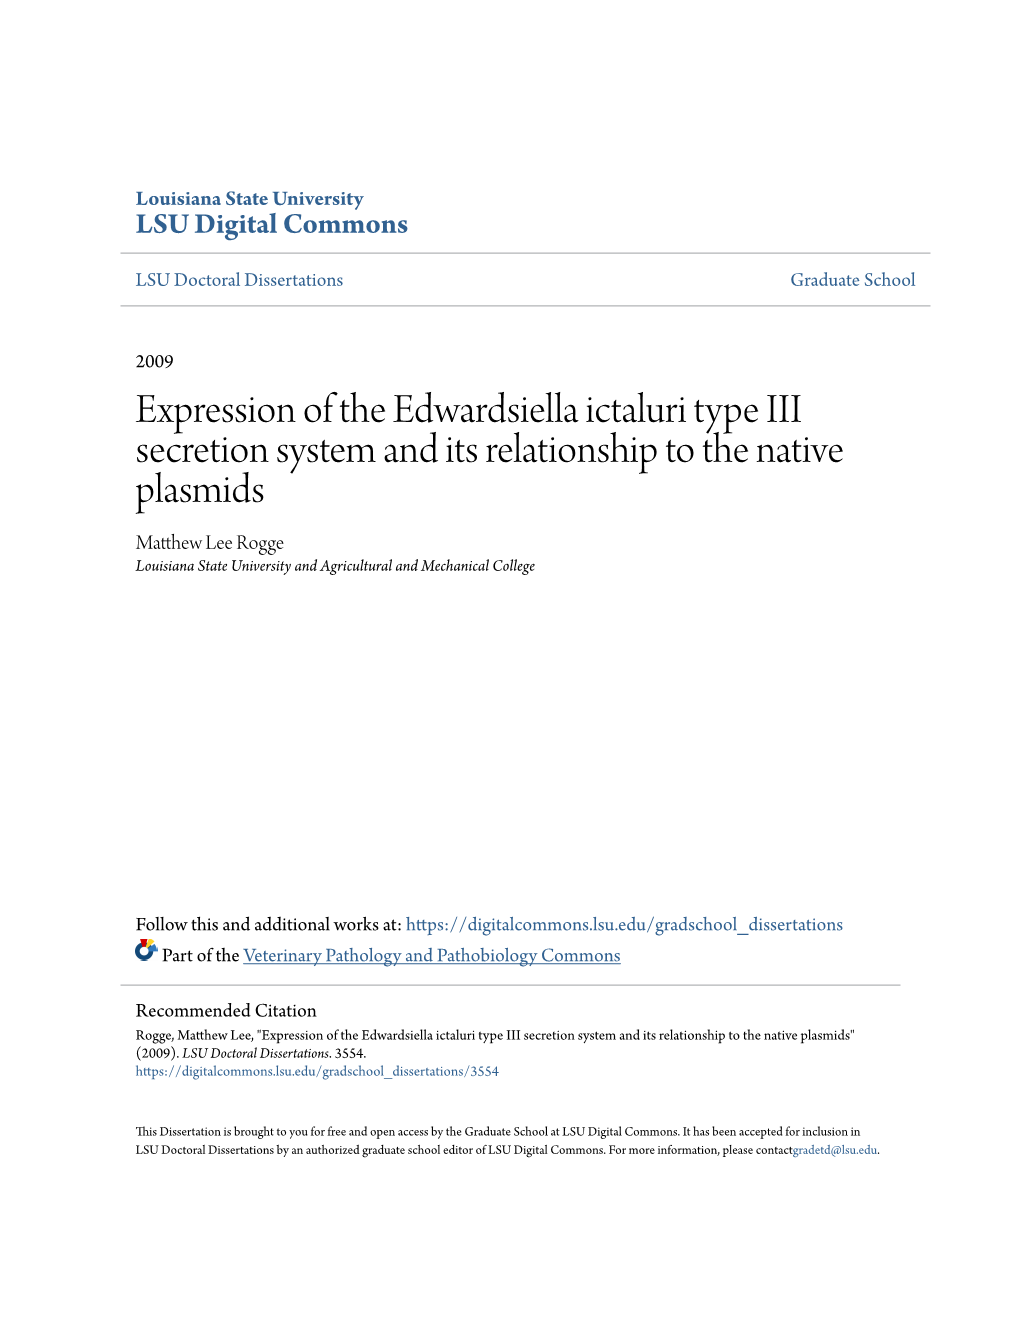 Expression of the Edwardsiella Ictaluri Type III Secretion System and Its